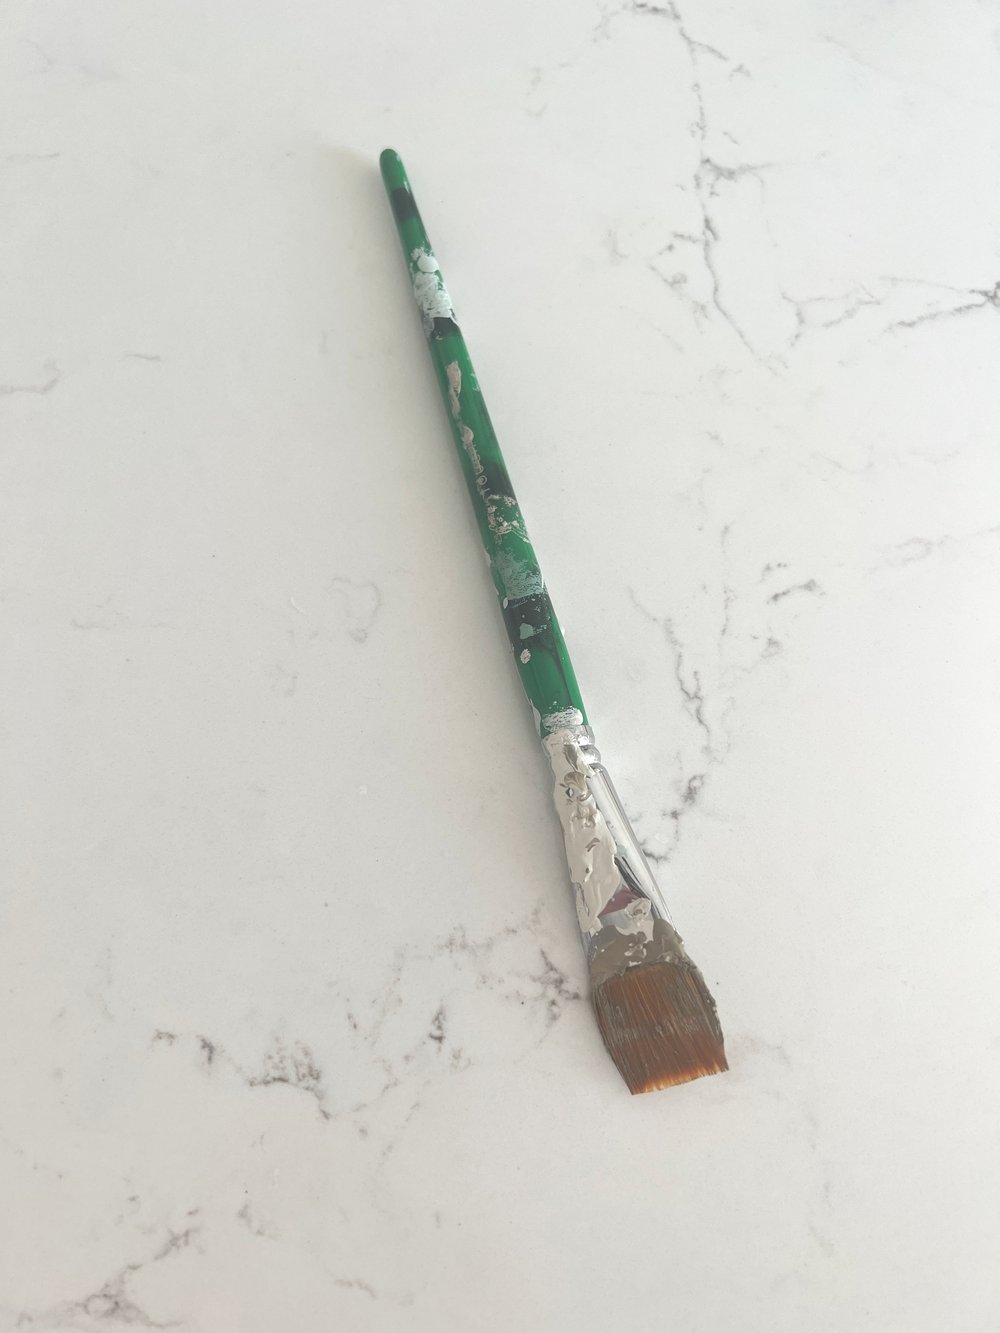 Flat paint brush stolen from daughter